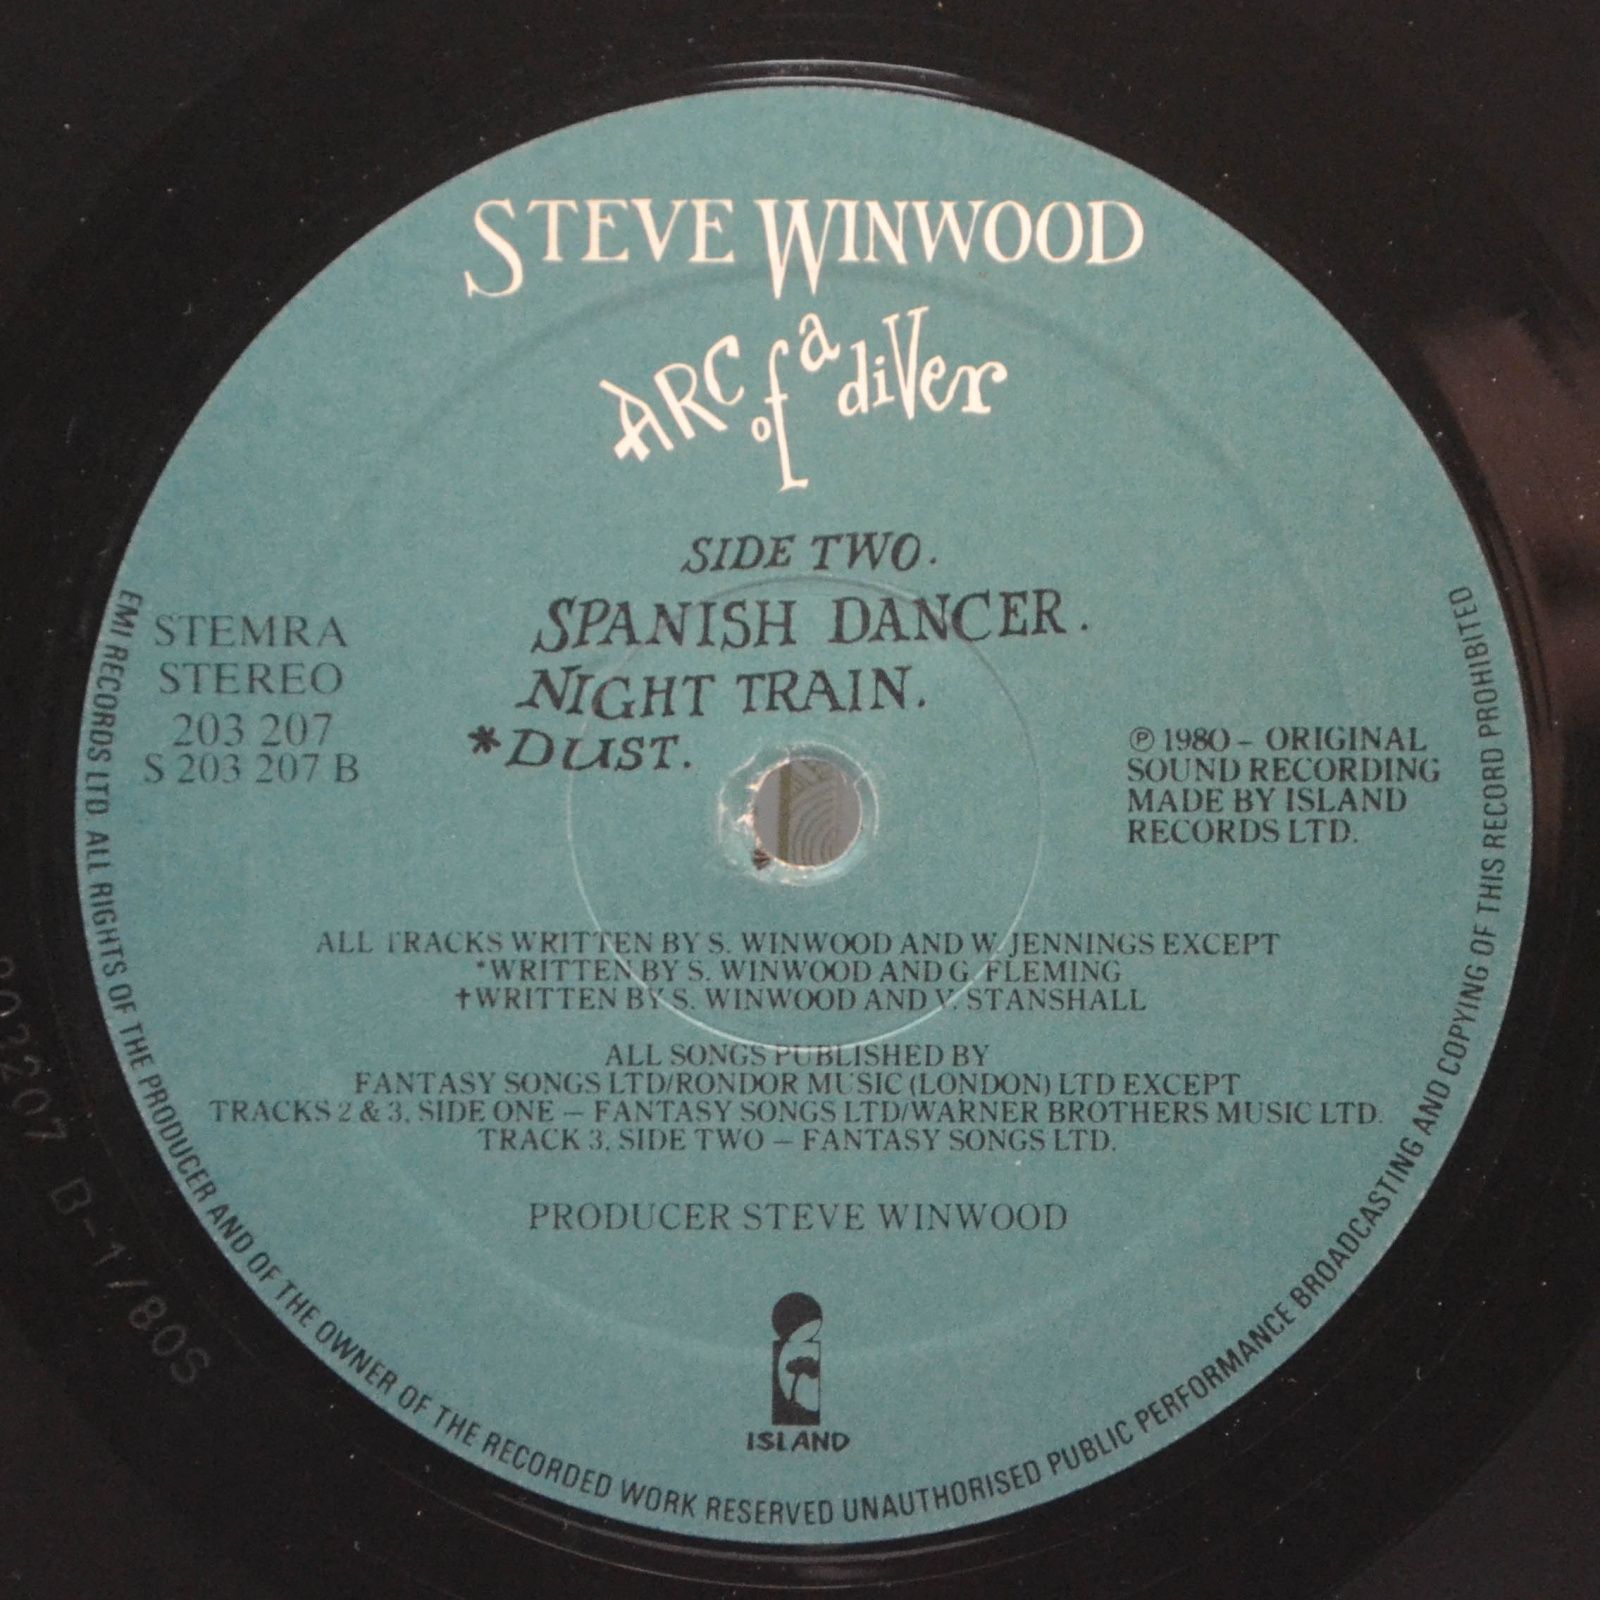 Steve Winwood — Arc Of A Diver, 1980